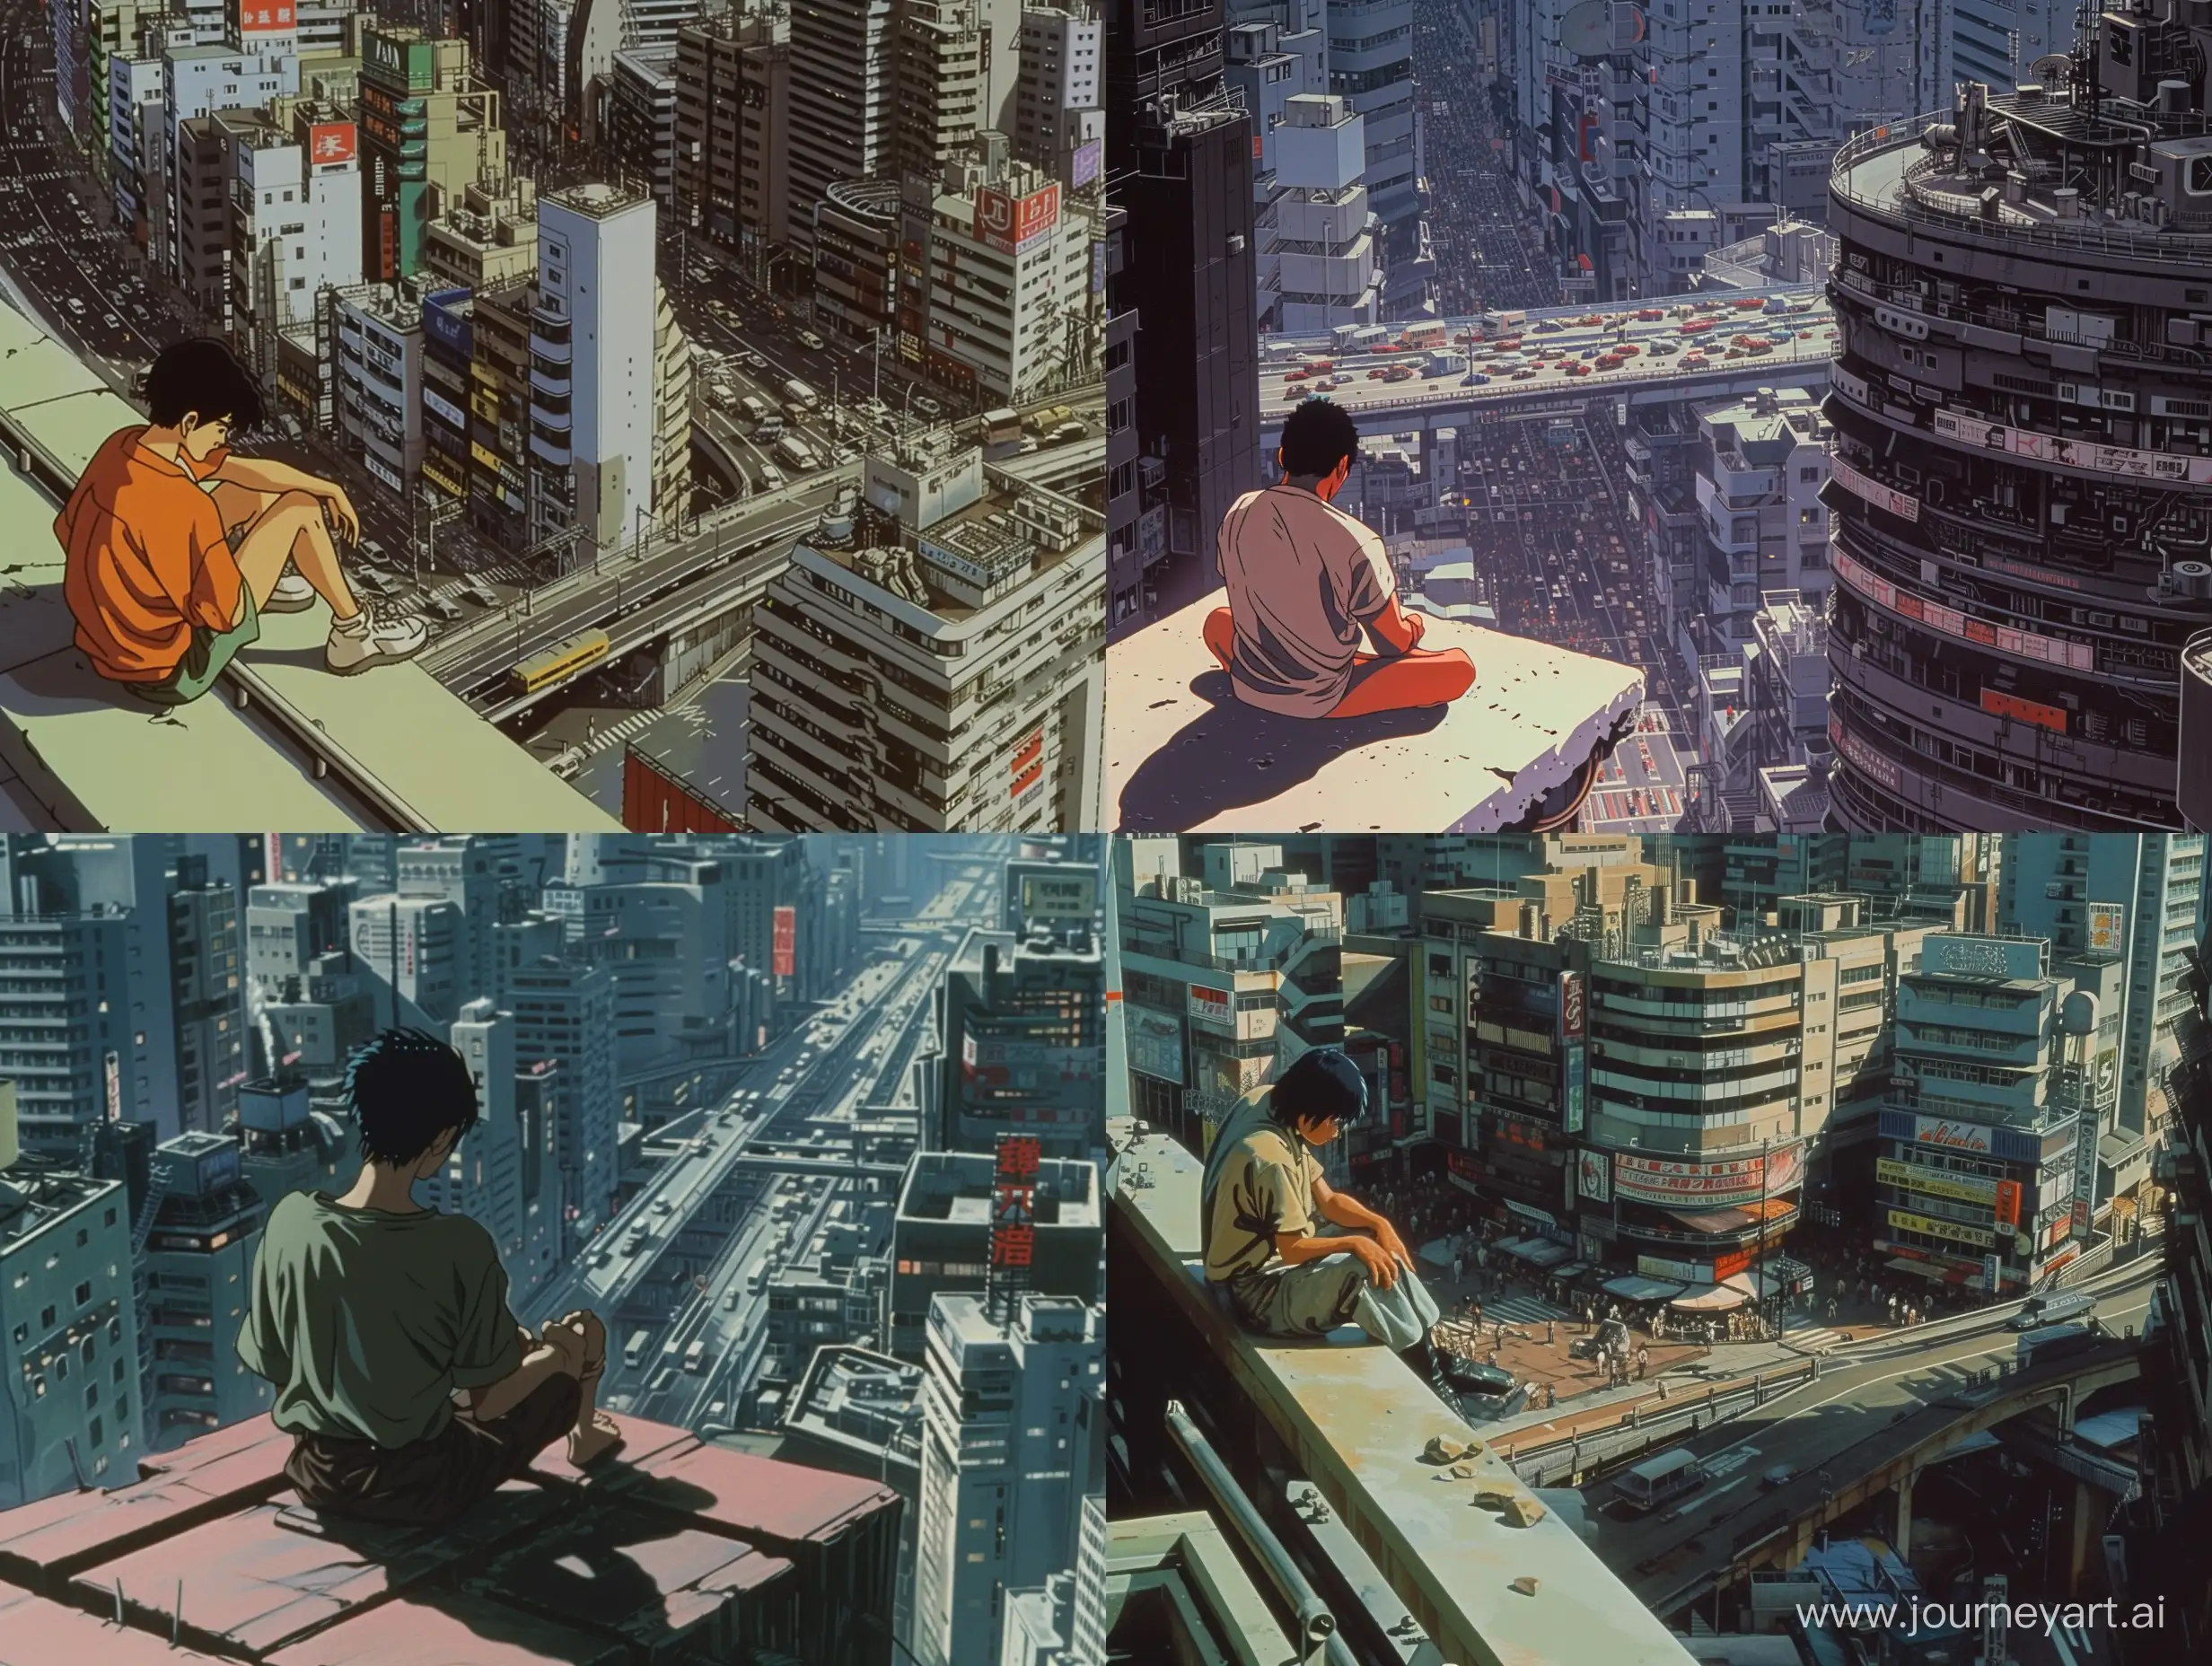 Futuristic-Cyberpunk-Cityscape-Nostalgic-Anime-Vibes-with-a-Cyberpunk-Man-on-Rooftop